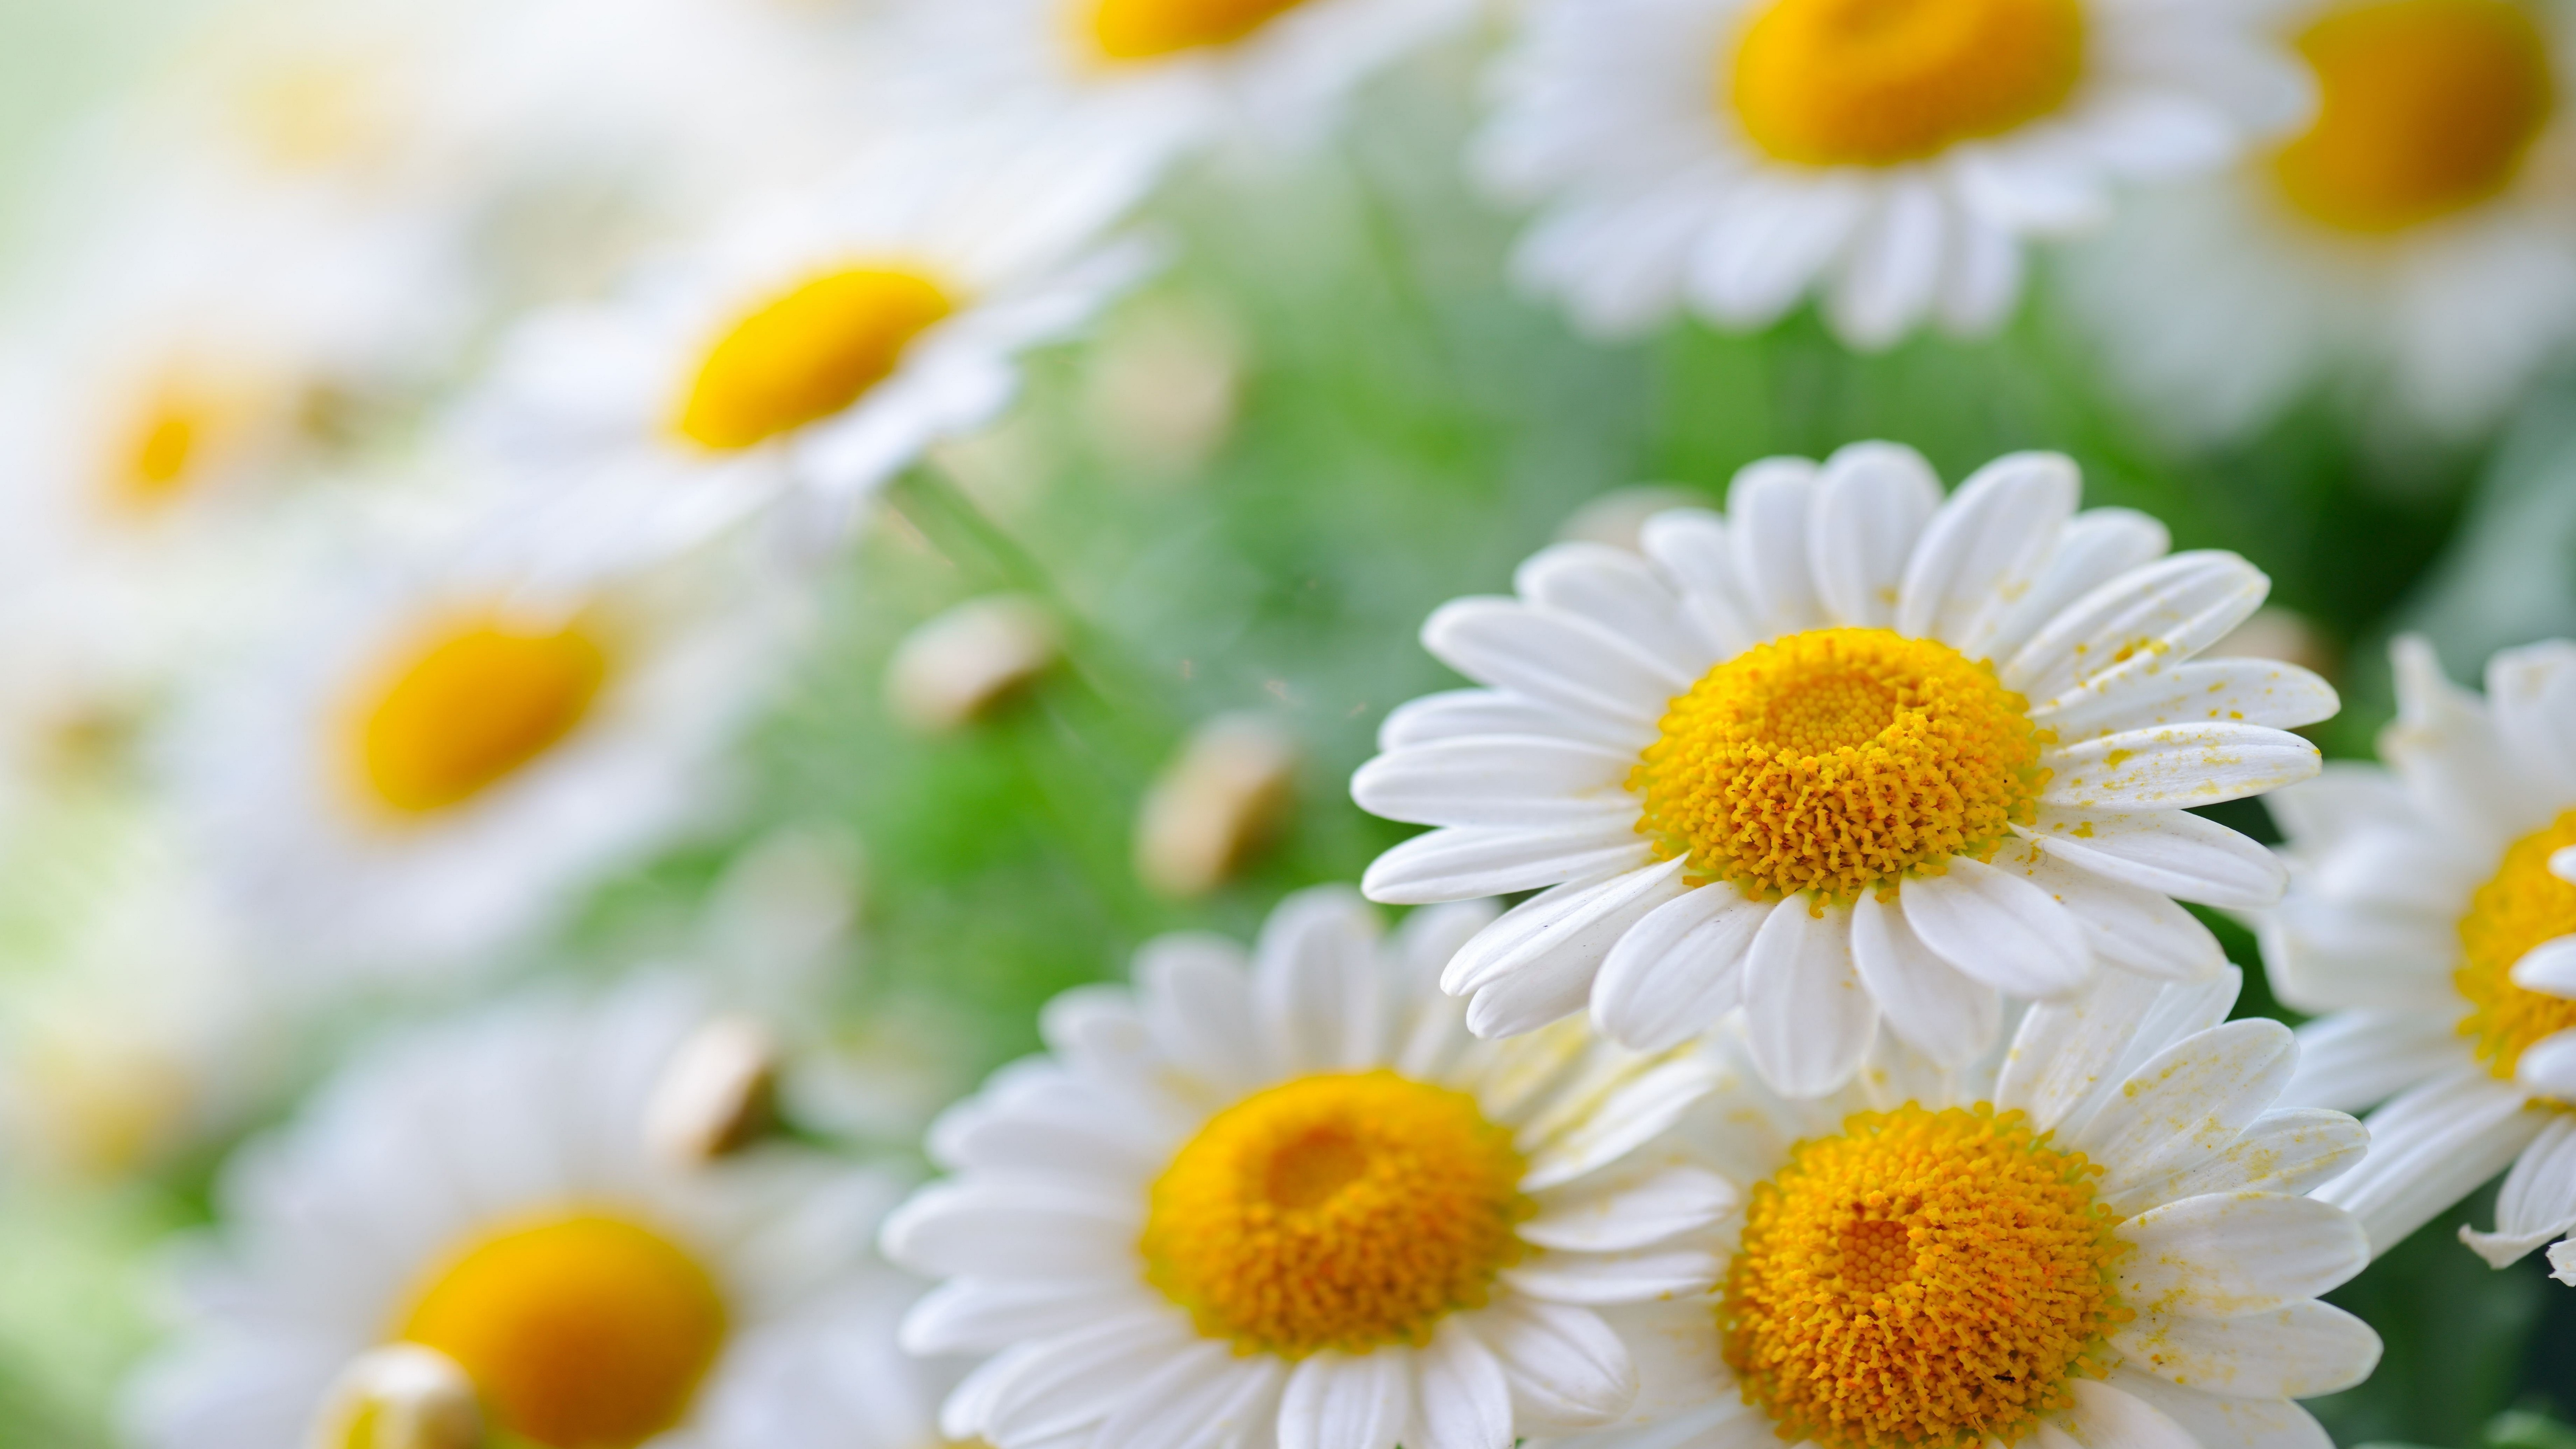 Daisy Flower for 7680 x 4320 8K Ultra HD resolution